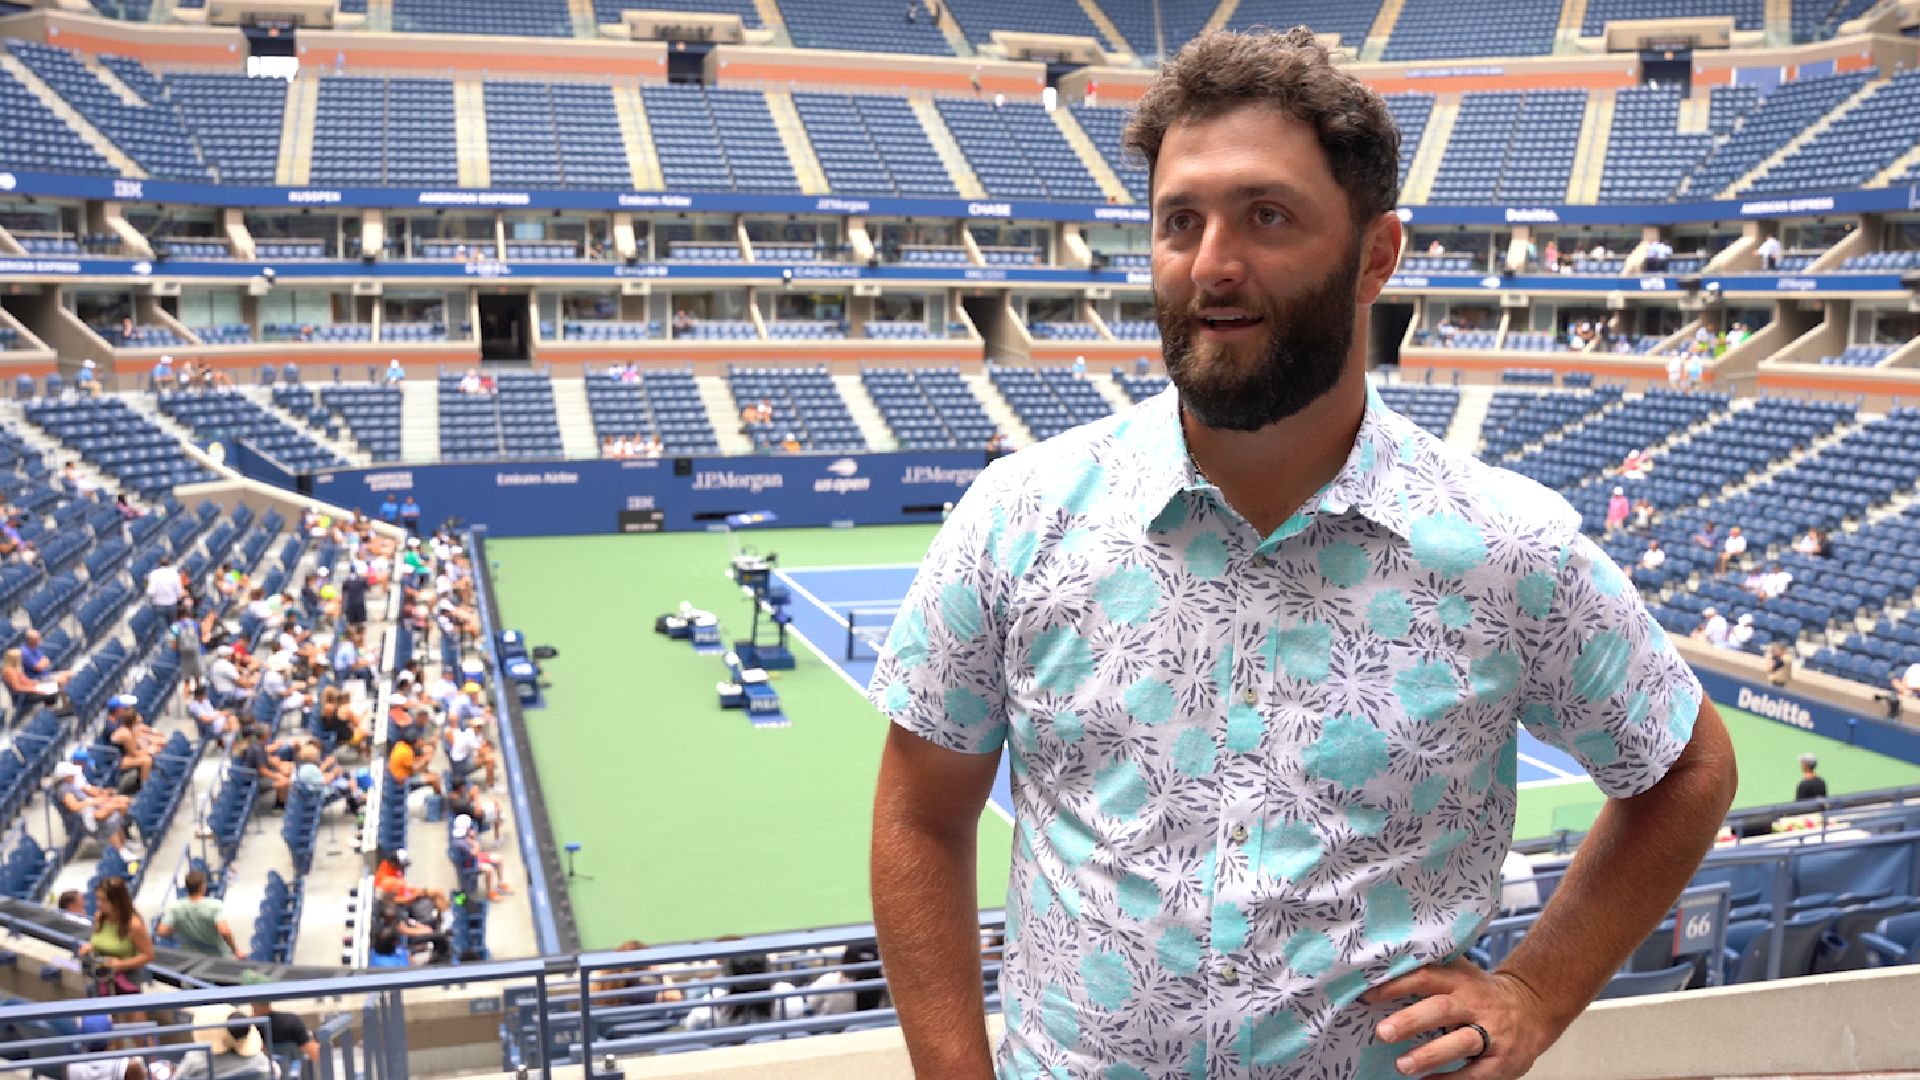 Why Jon Rahm loves tennis, rising star Carlos Alcaraz